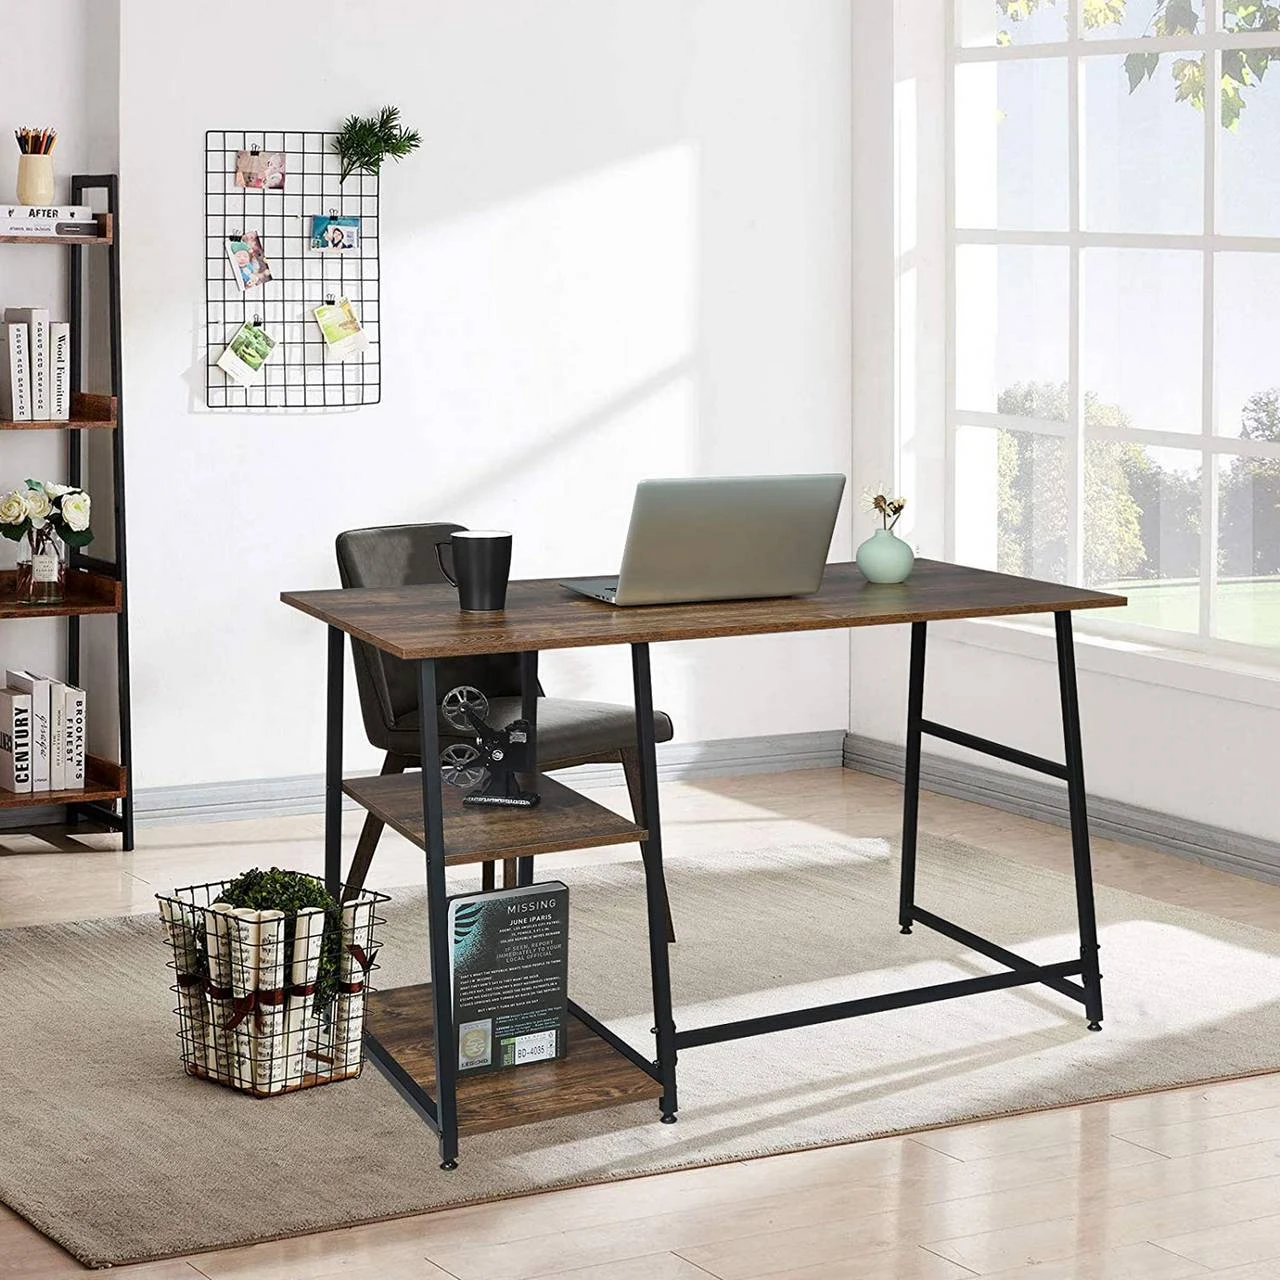 Modern design cheap office workstation laptop desk computer office desk study writing table with shelves